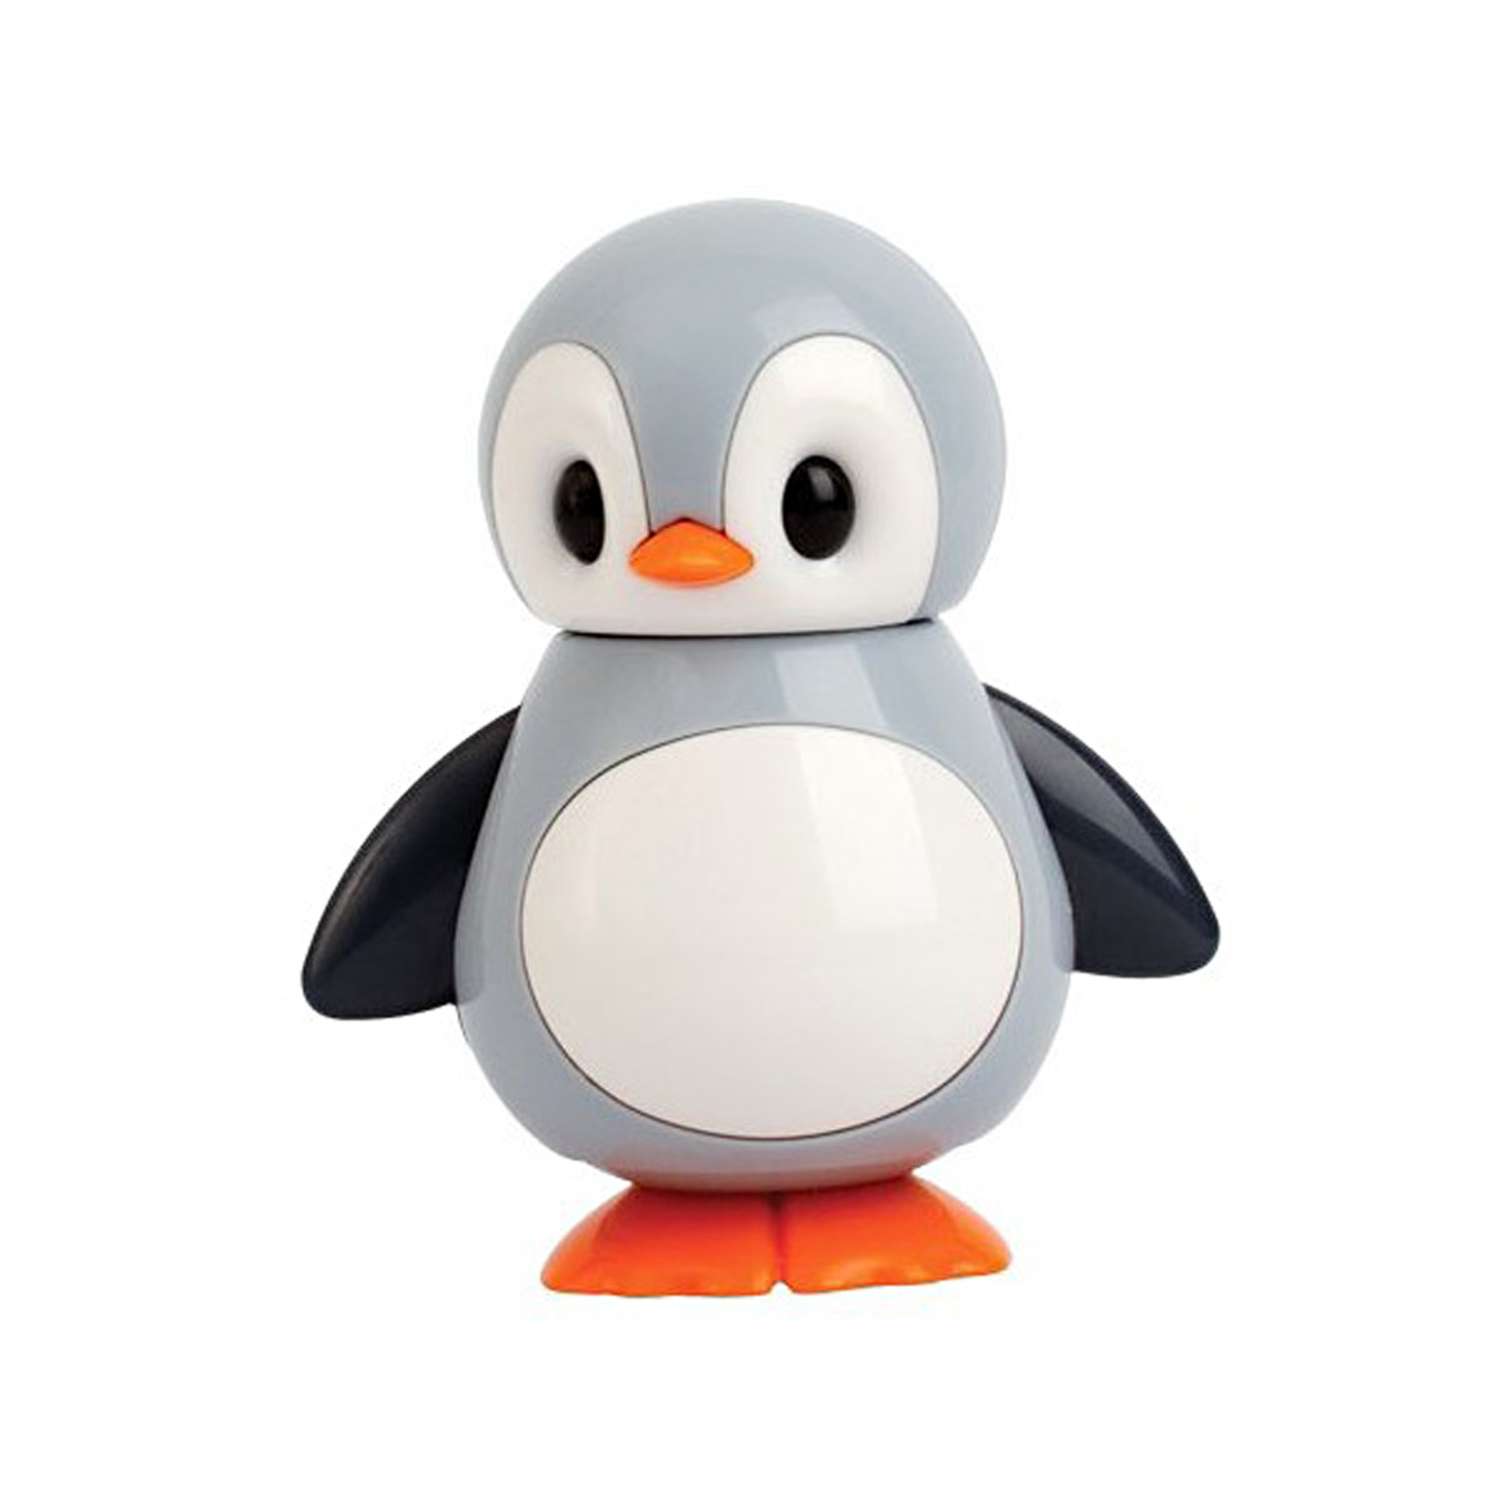 А Развивающая игрушка Ути Пути крутилка Пингвин - фото 1